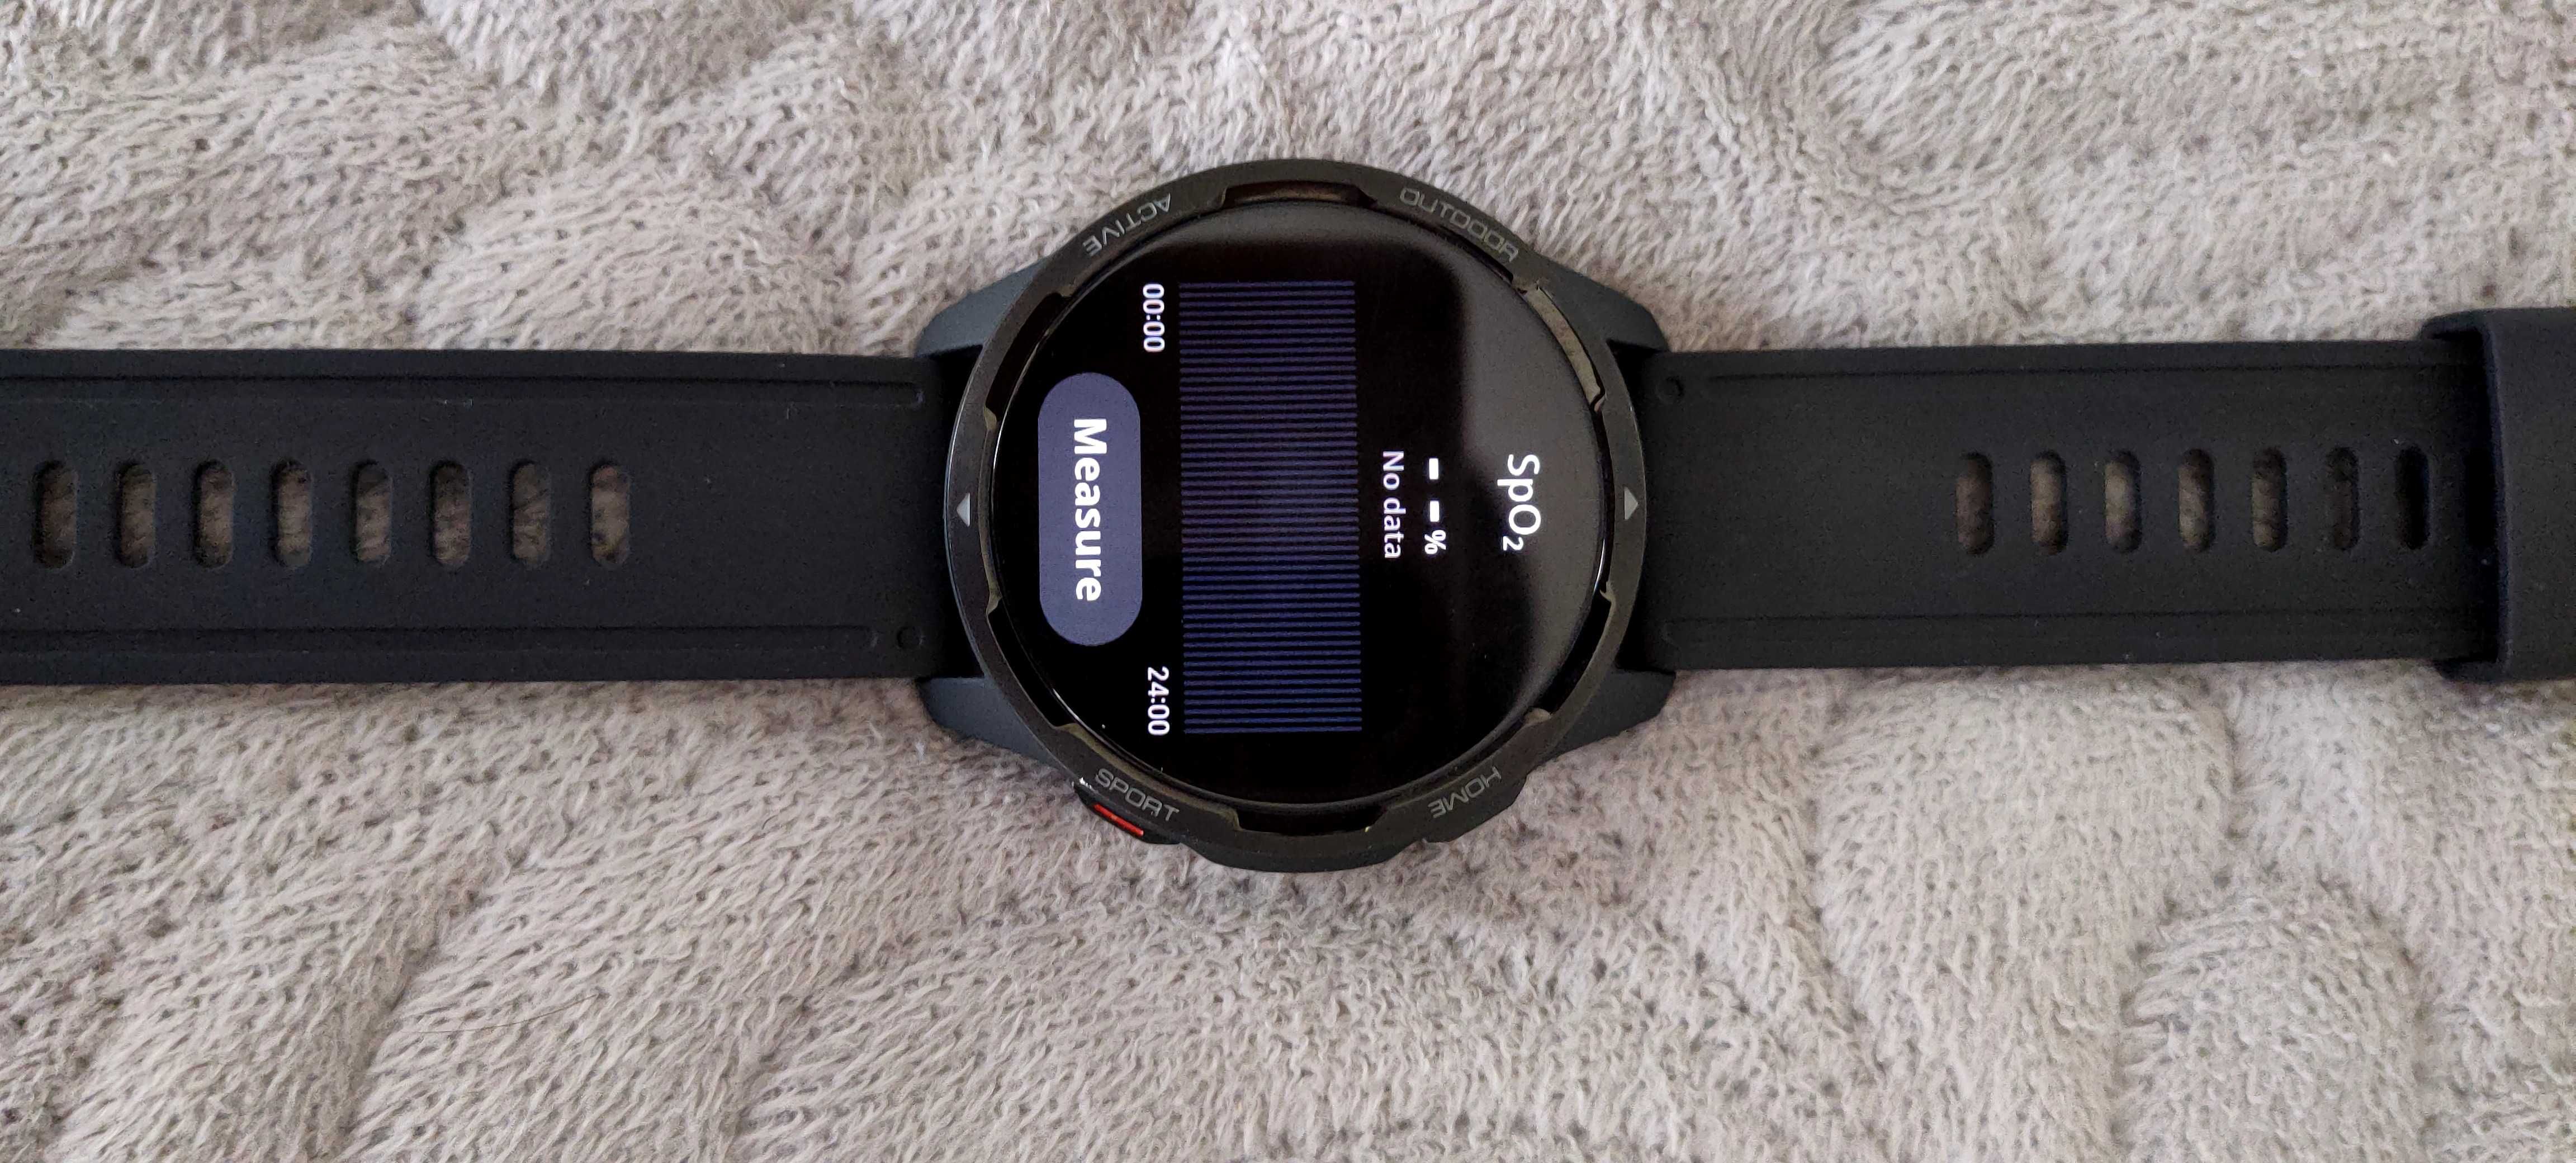 Смарт часовник Xiaomi Watch S1 Active + подарък